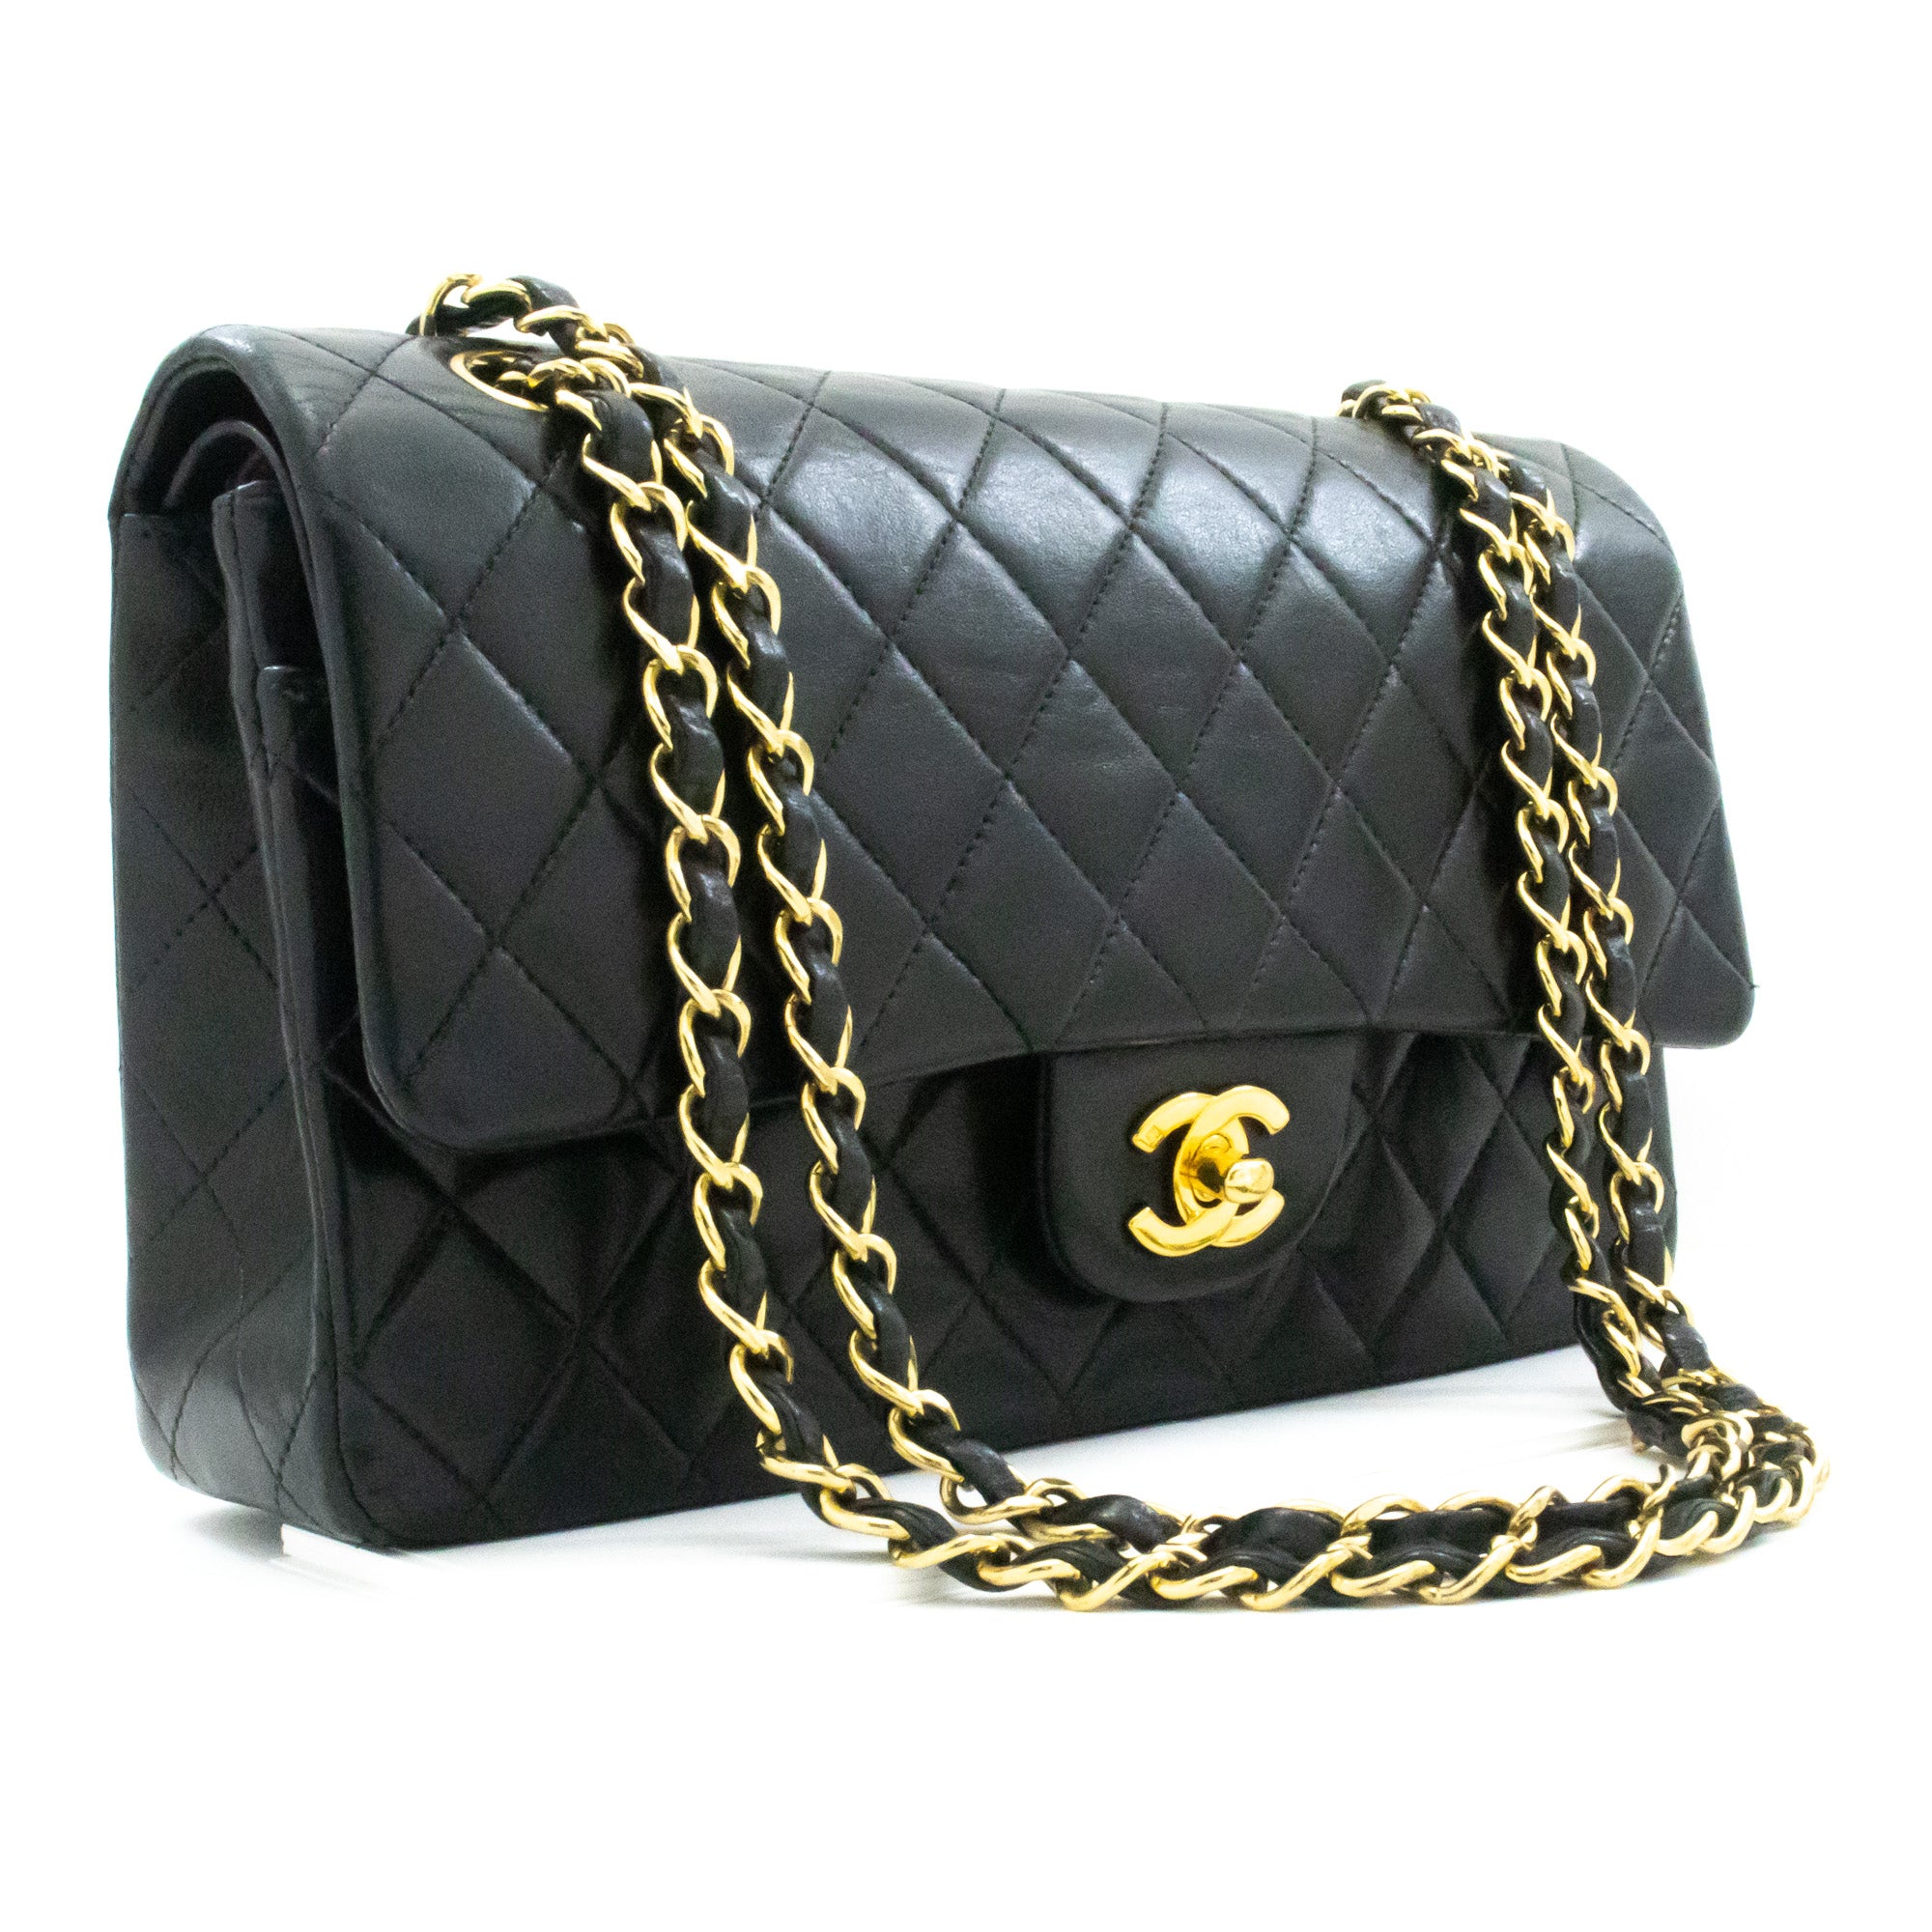 Chanel medium classic flap bag black lambskin gold hardware, Essie